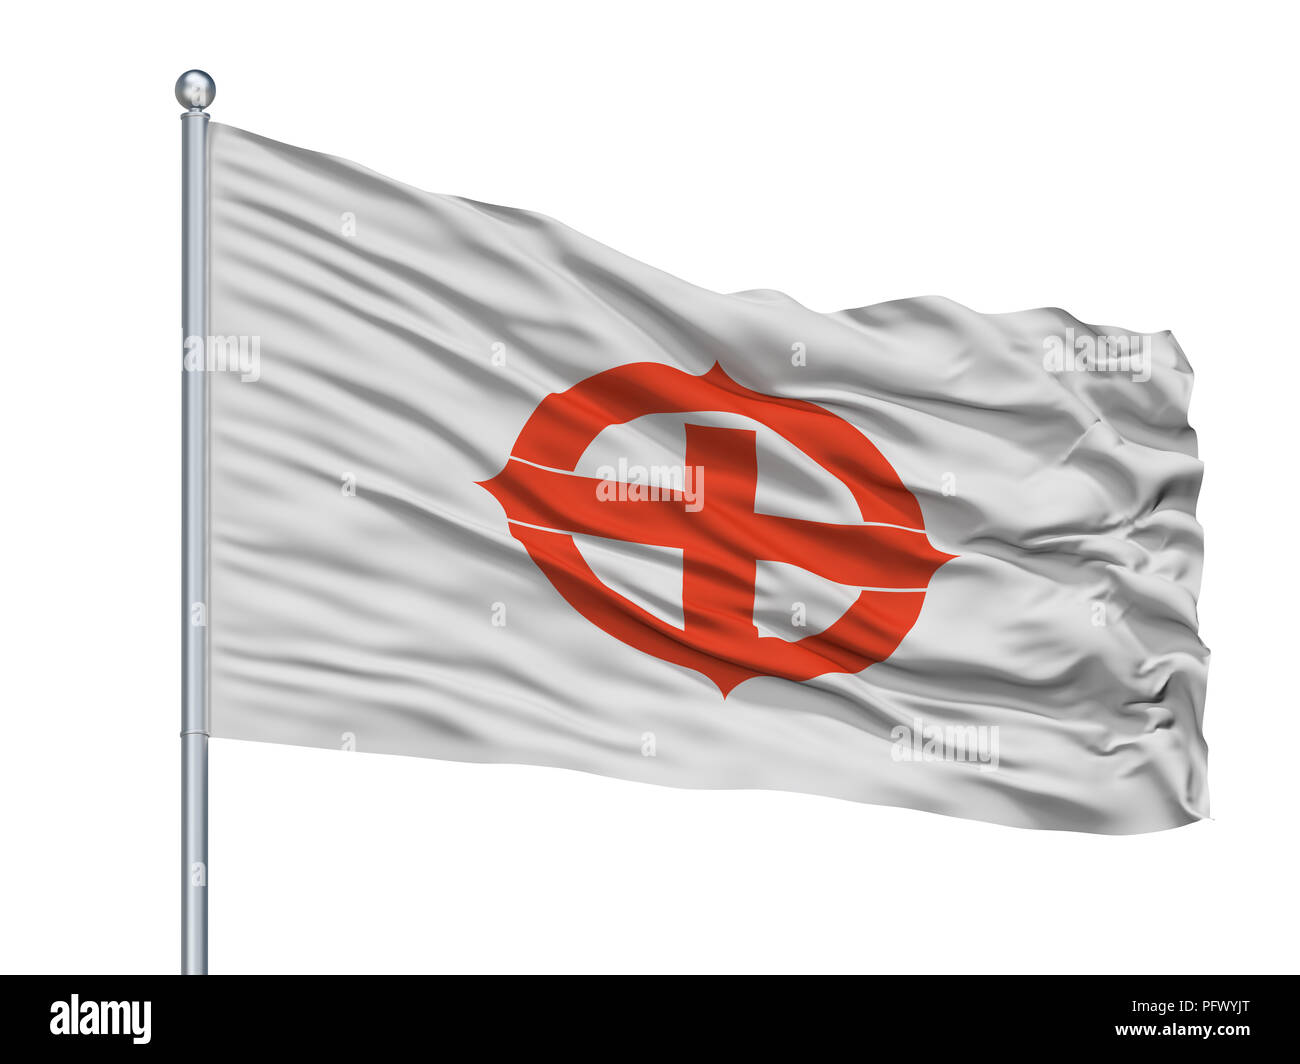 Hekinan City Flag On Flagpole, Japan, Aichi Prefecture, Isolated On White Background Stock Photo